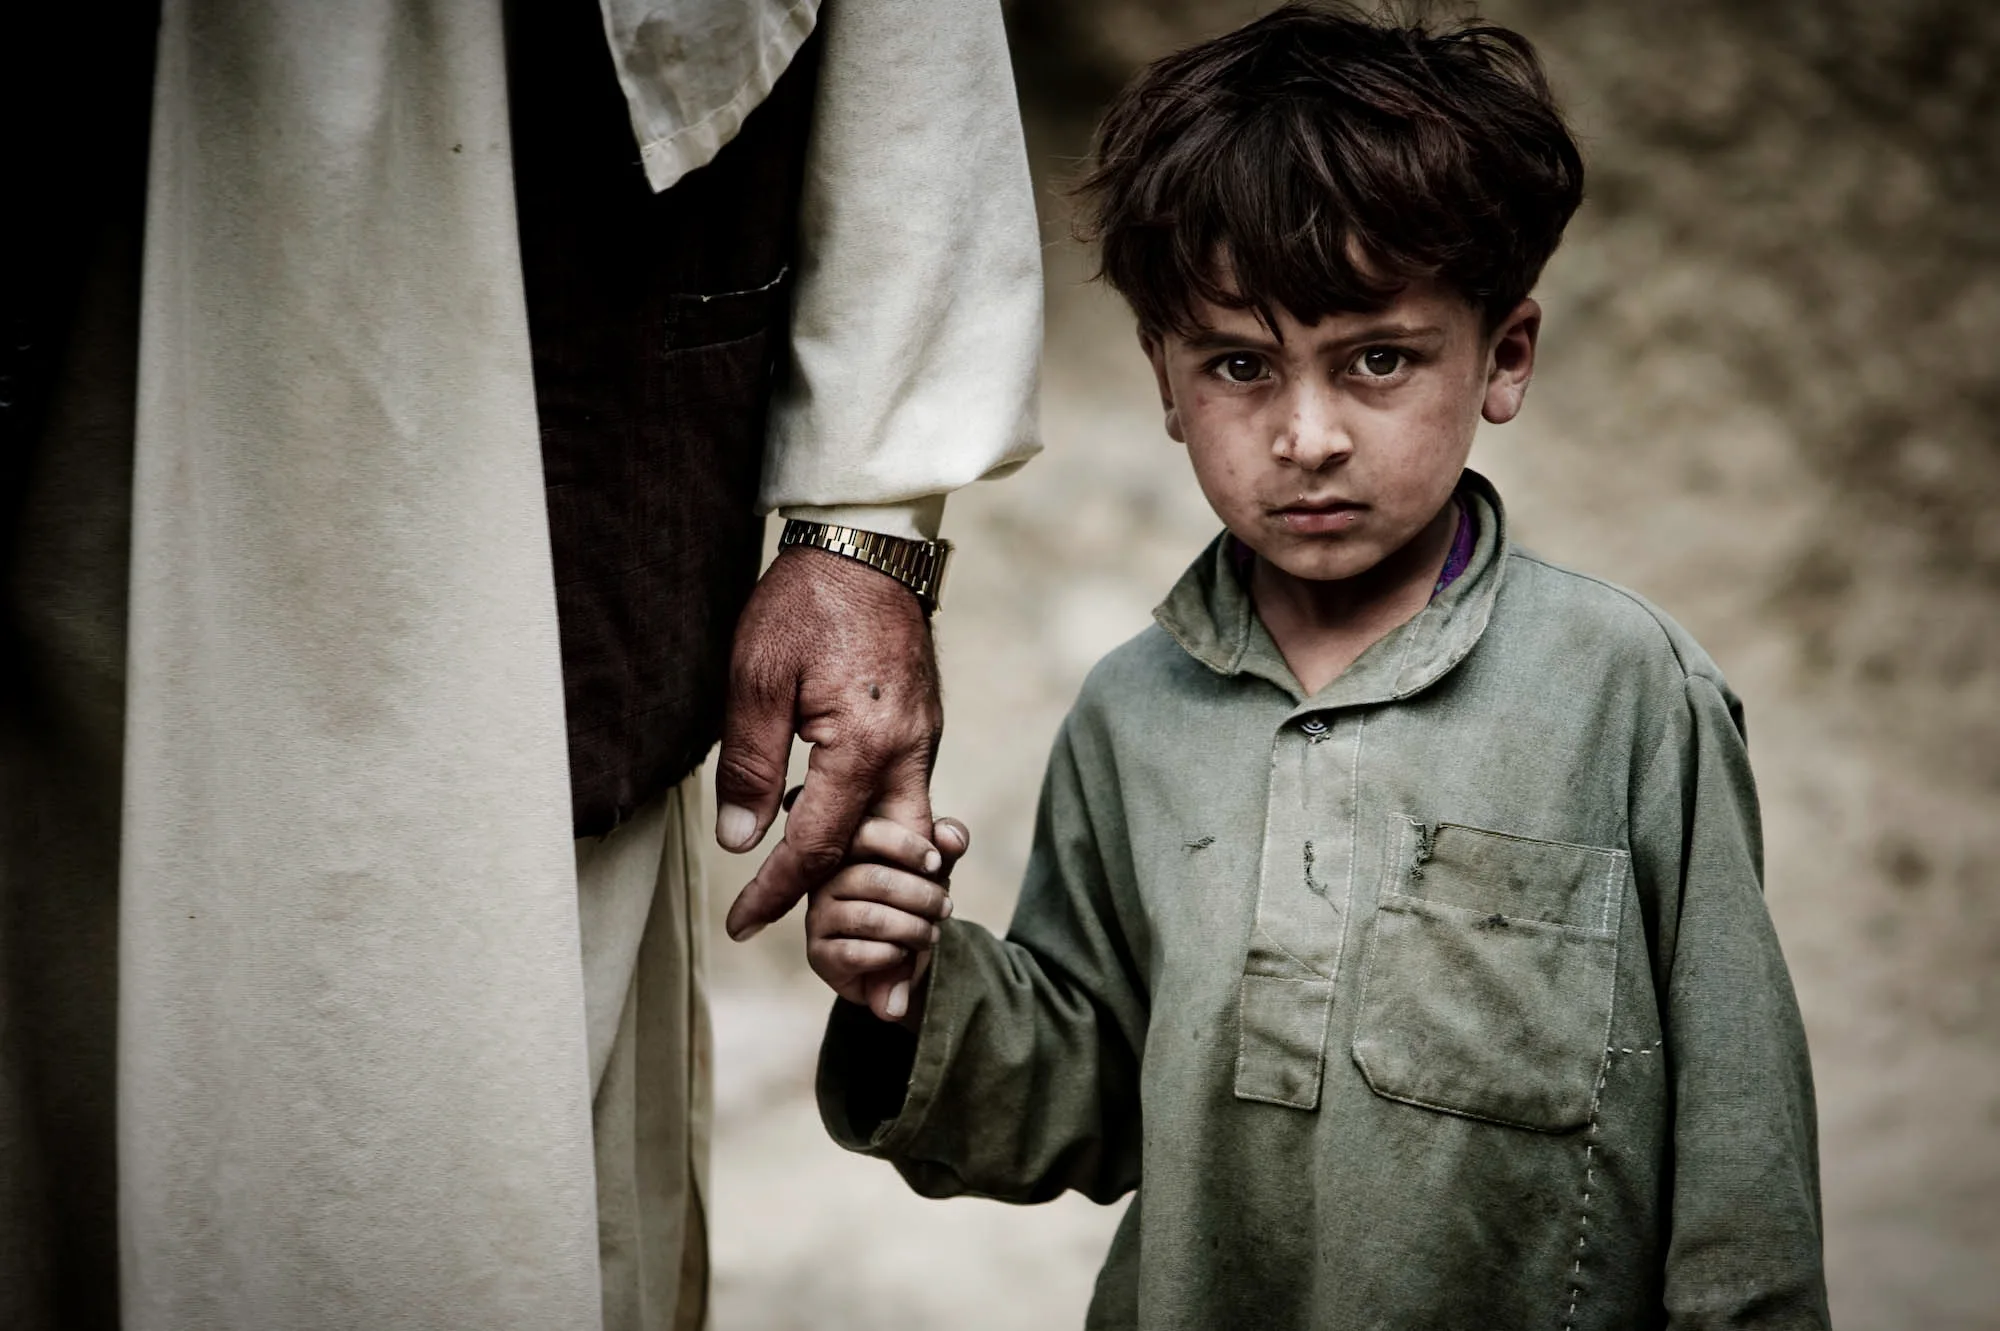 zoriah_photojournalist_photographer_afghanistan_war_conflict_child_children_army_20070810_1627